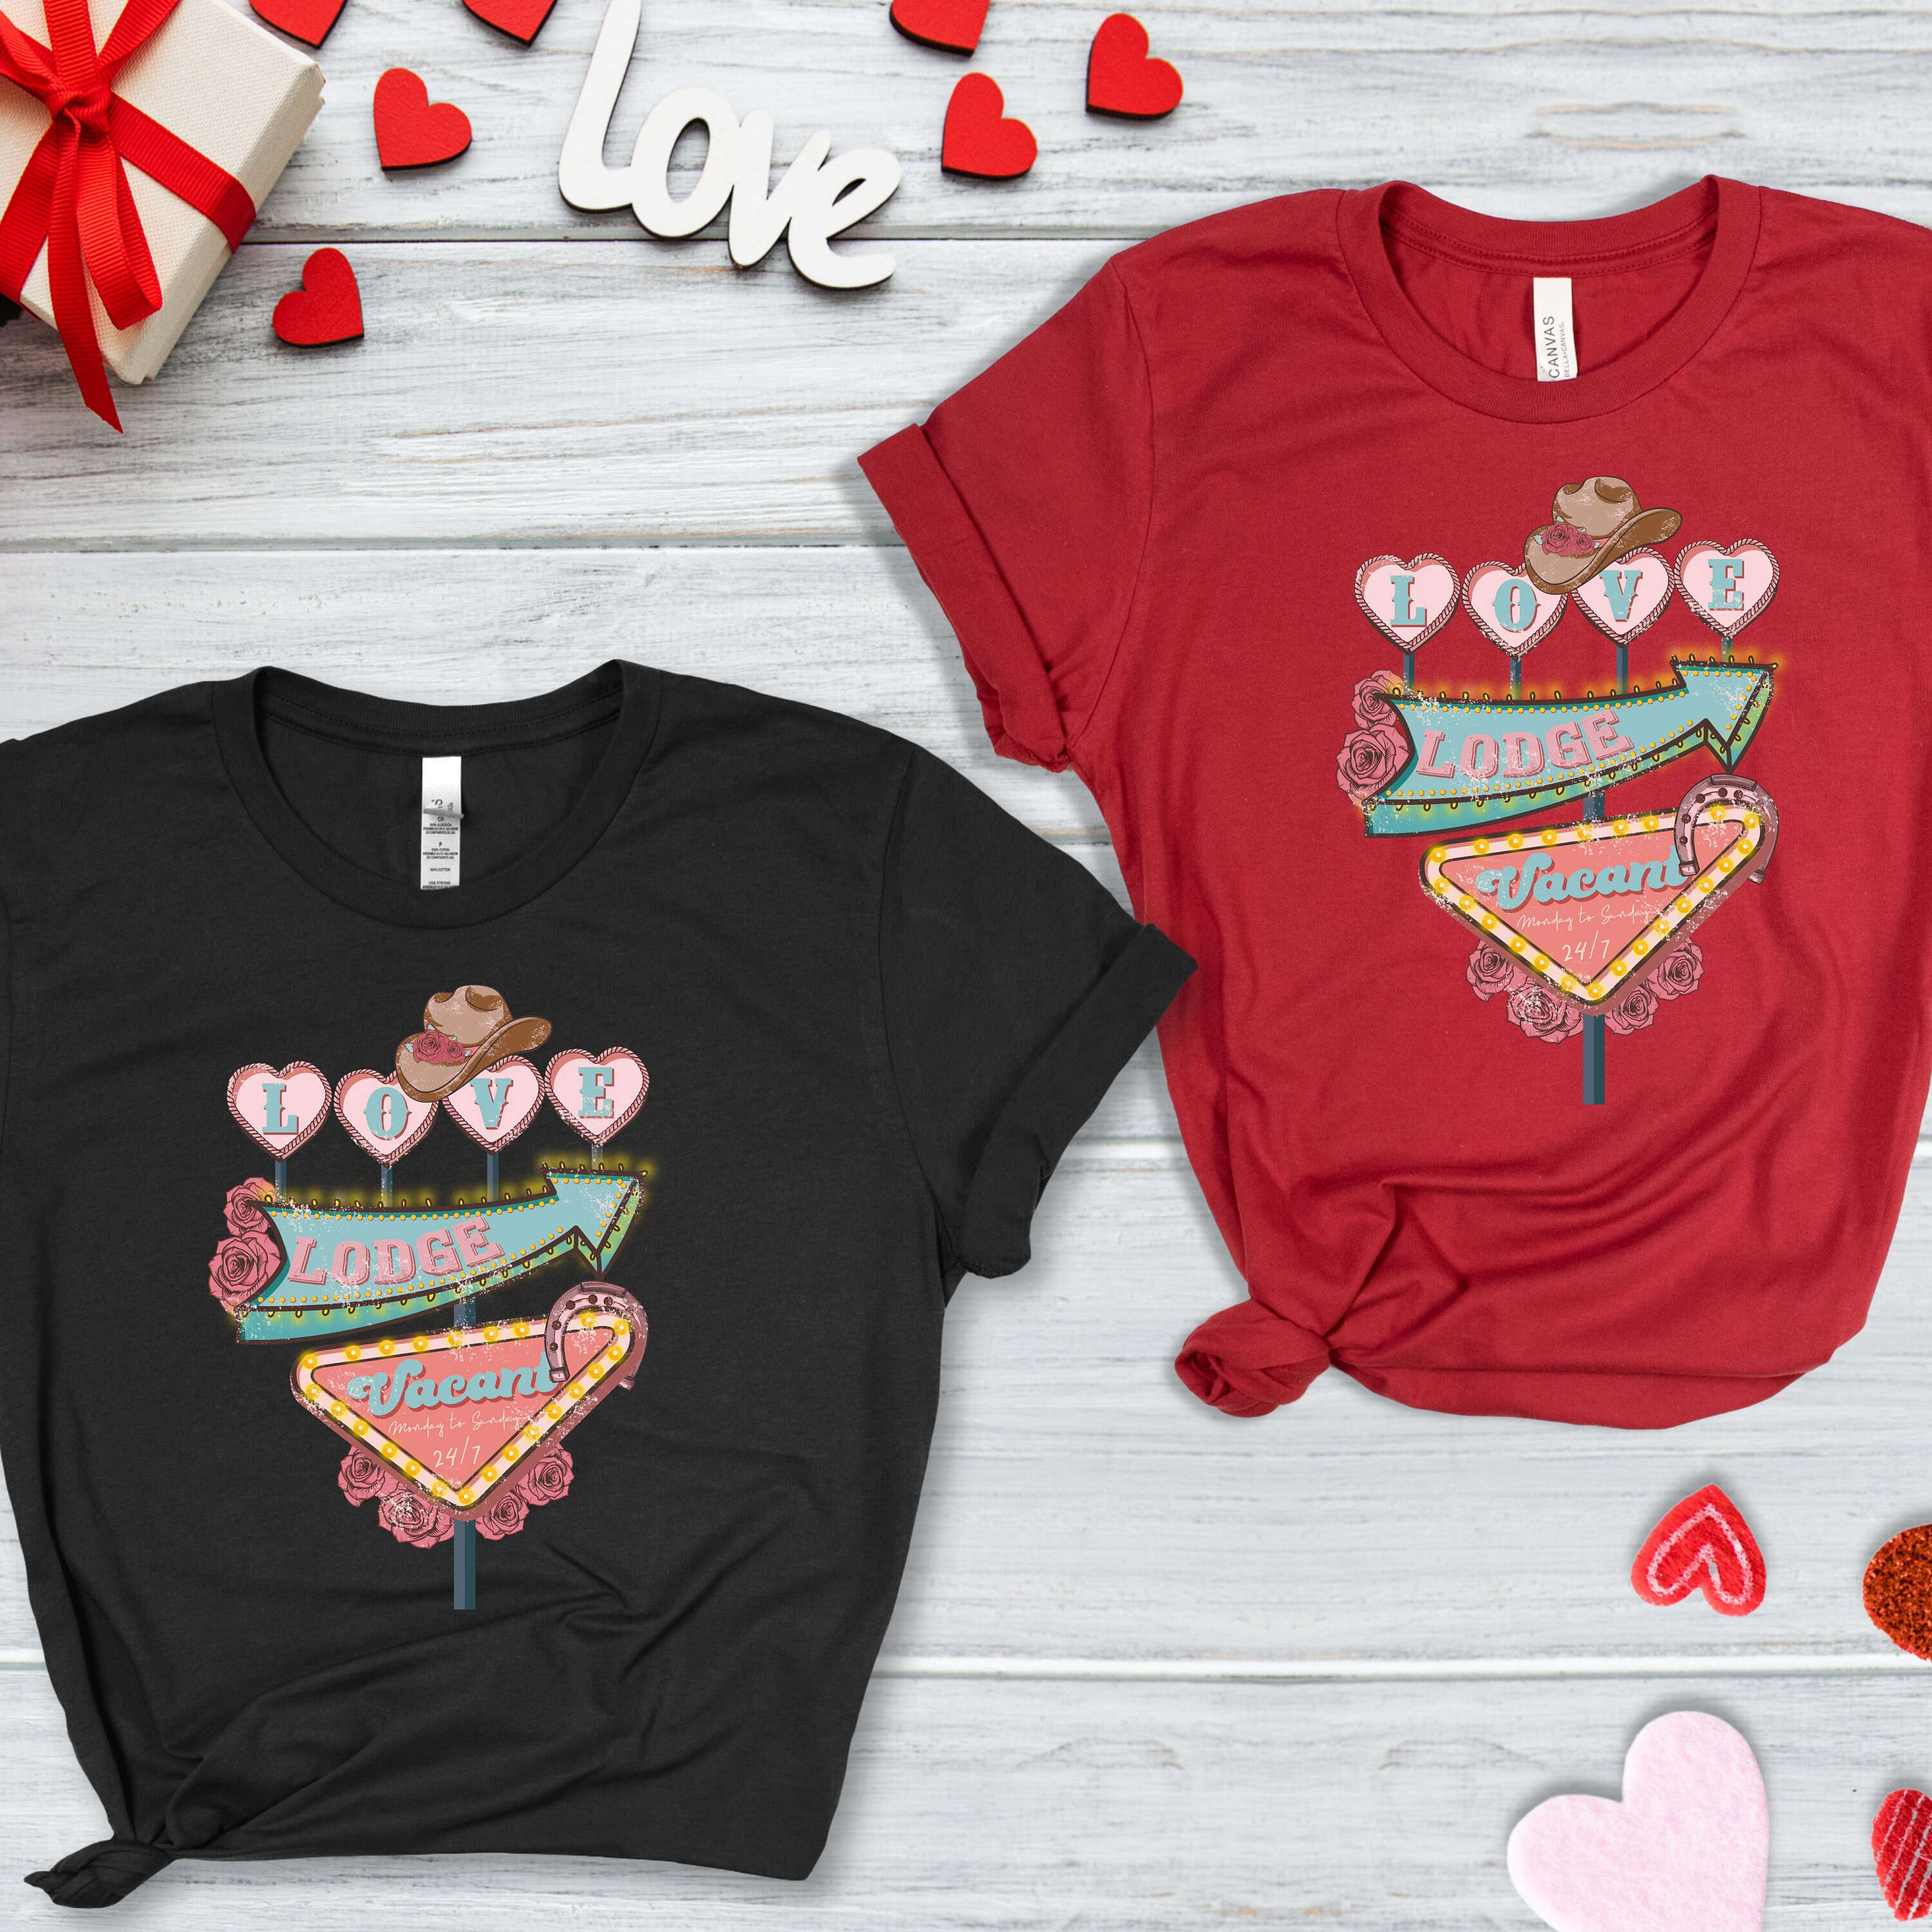 Love Lodge Retro Shirt – Valentine s Day Tee for Women Cowboy Western Heart Shirt